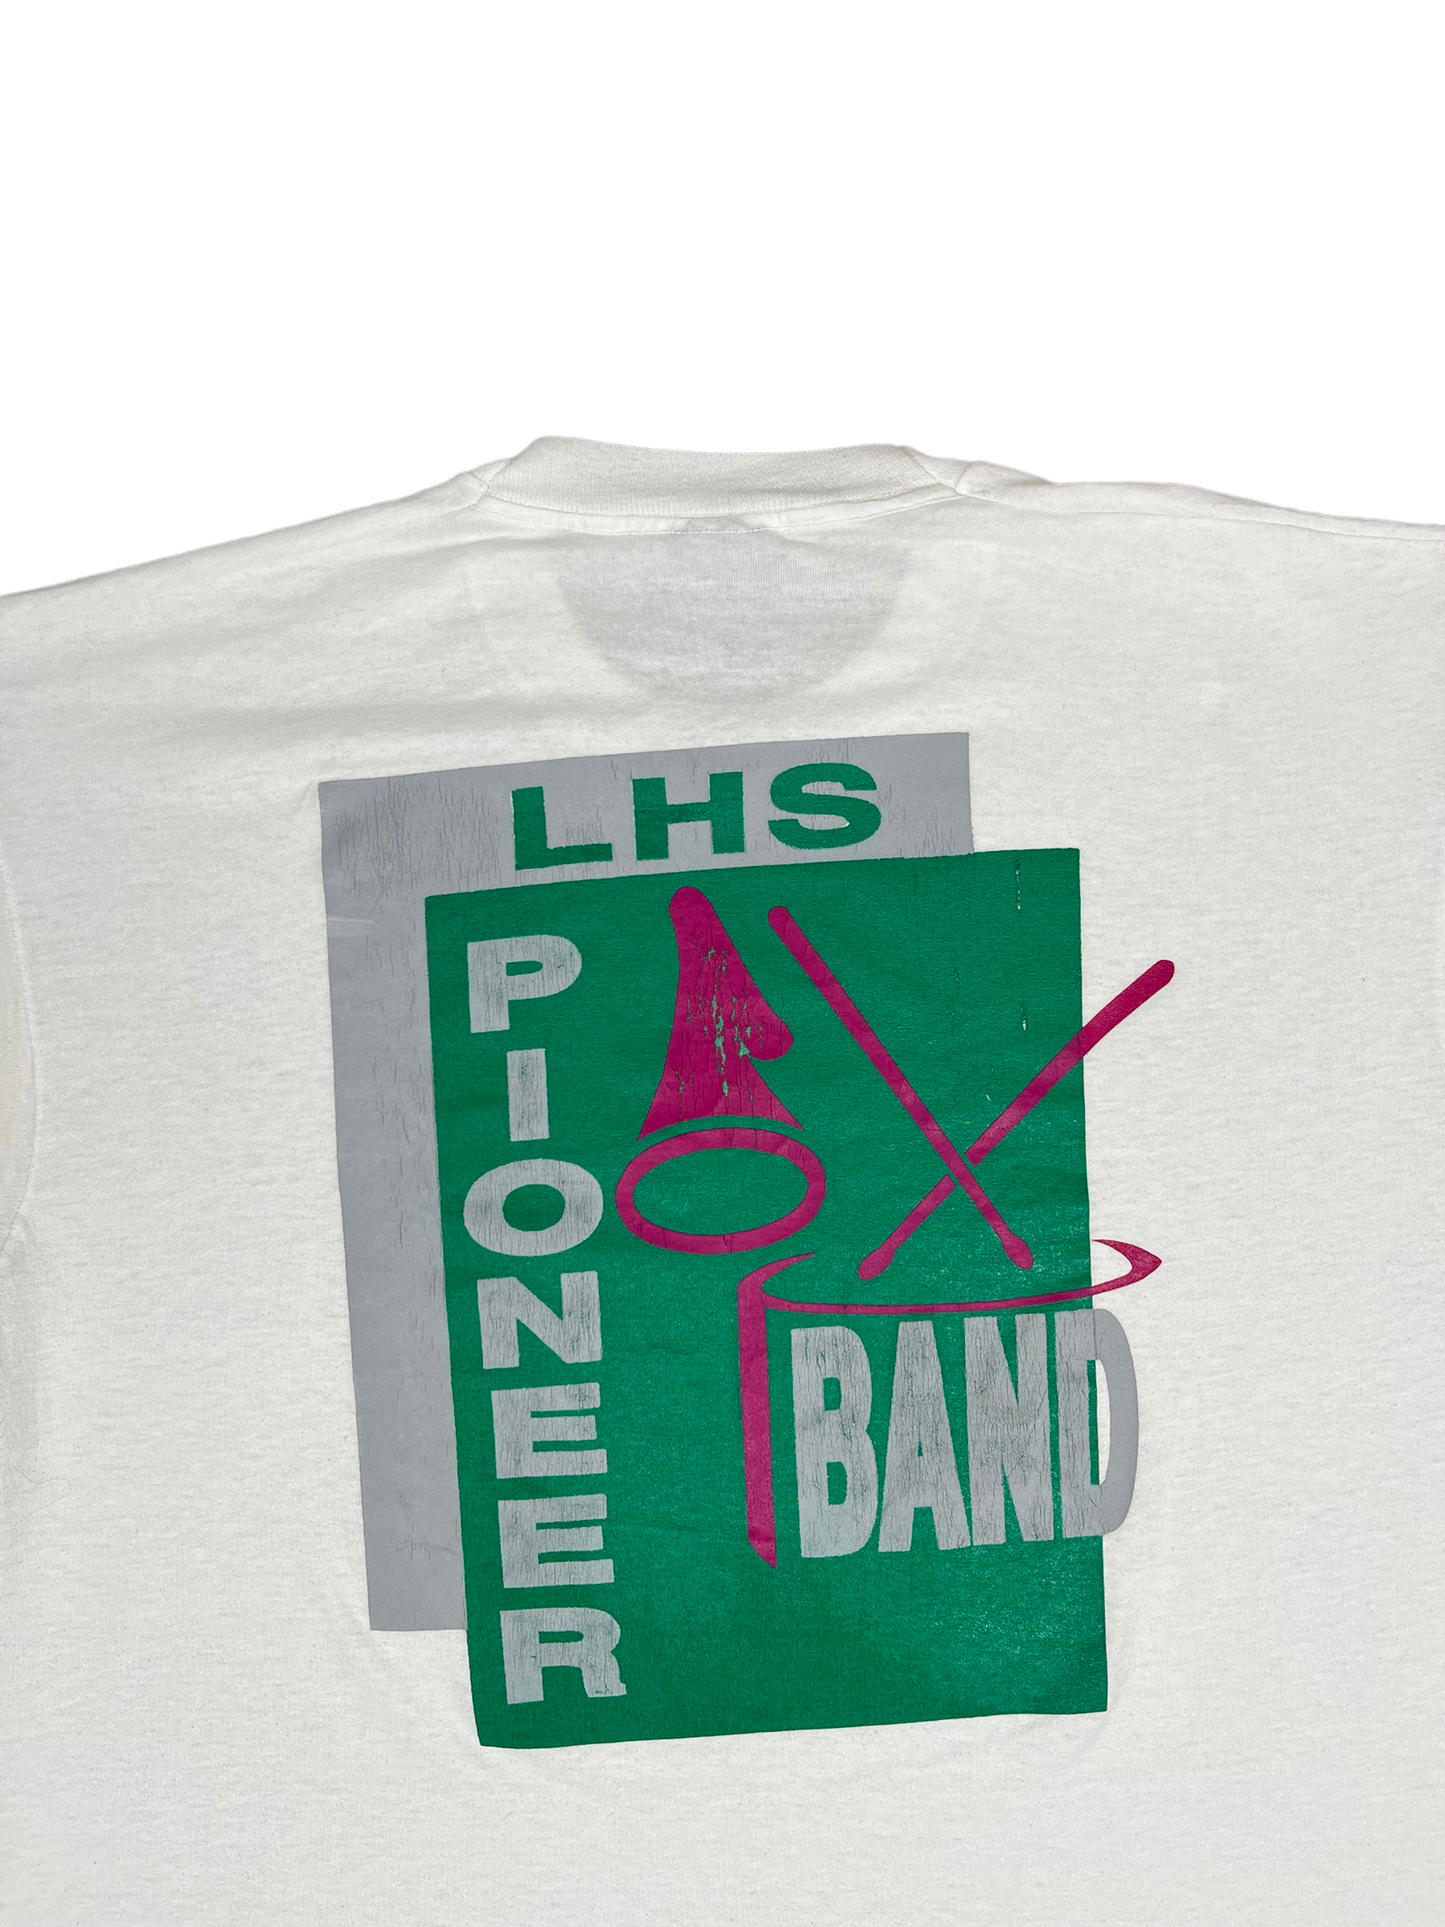 Vintage 90’s LHS Band 'Screen Stars' T Shirt - XL